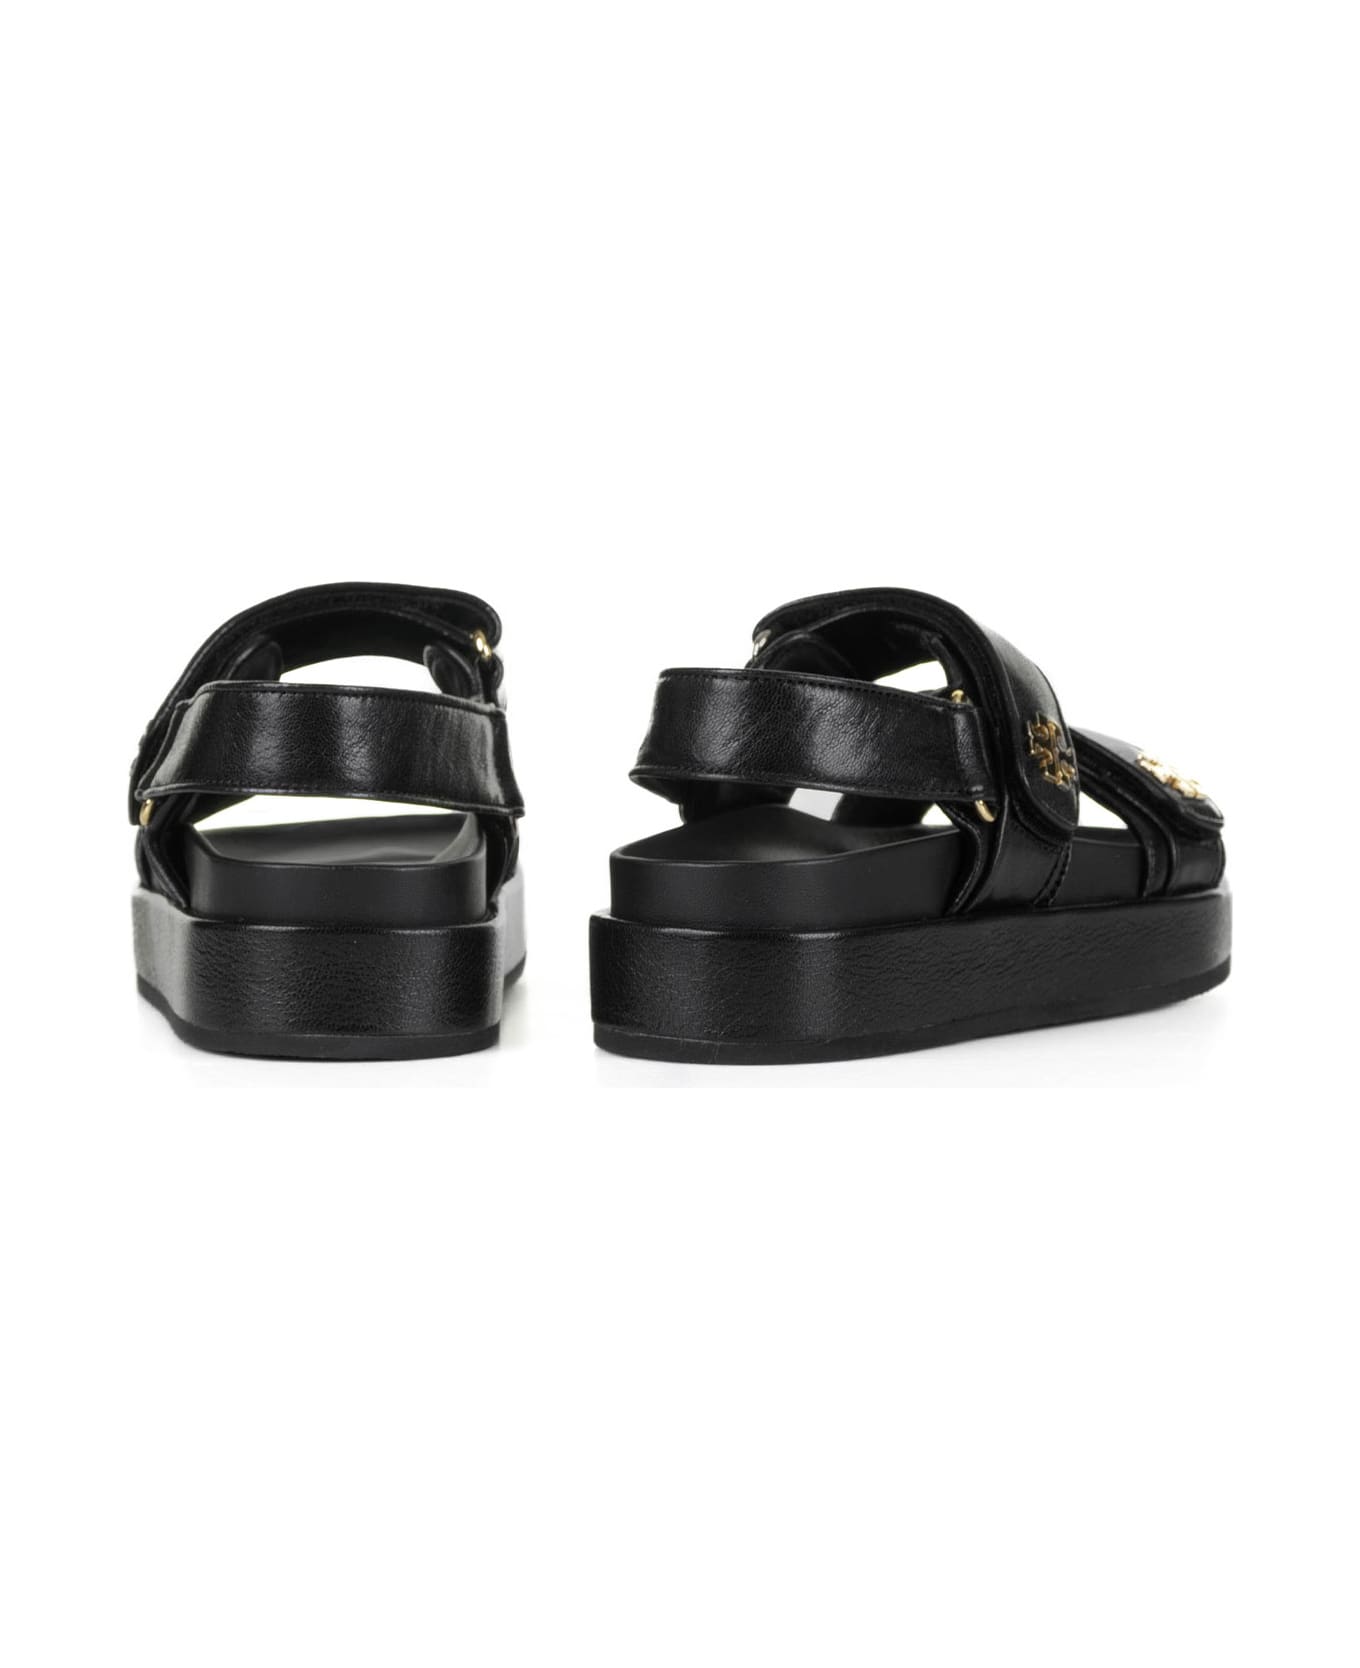 Tory Burch Sandals - PERFECT BLACK